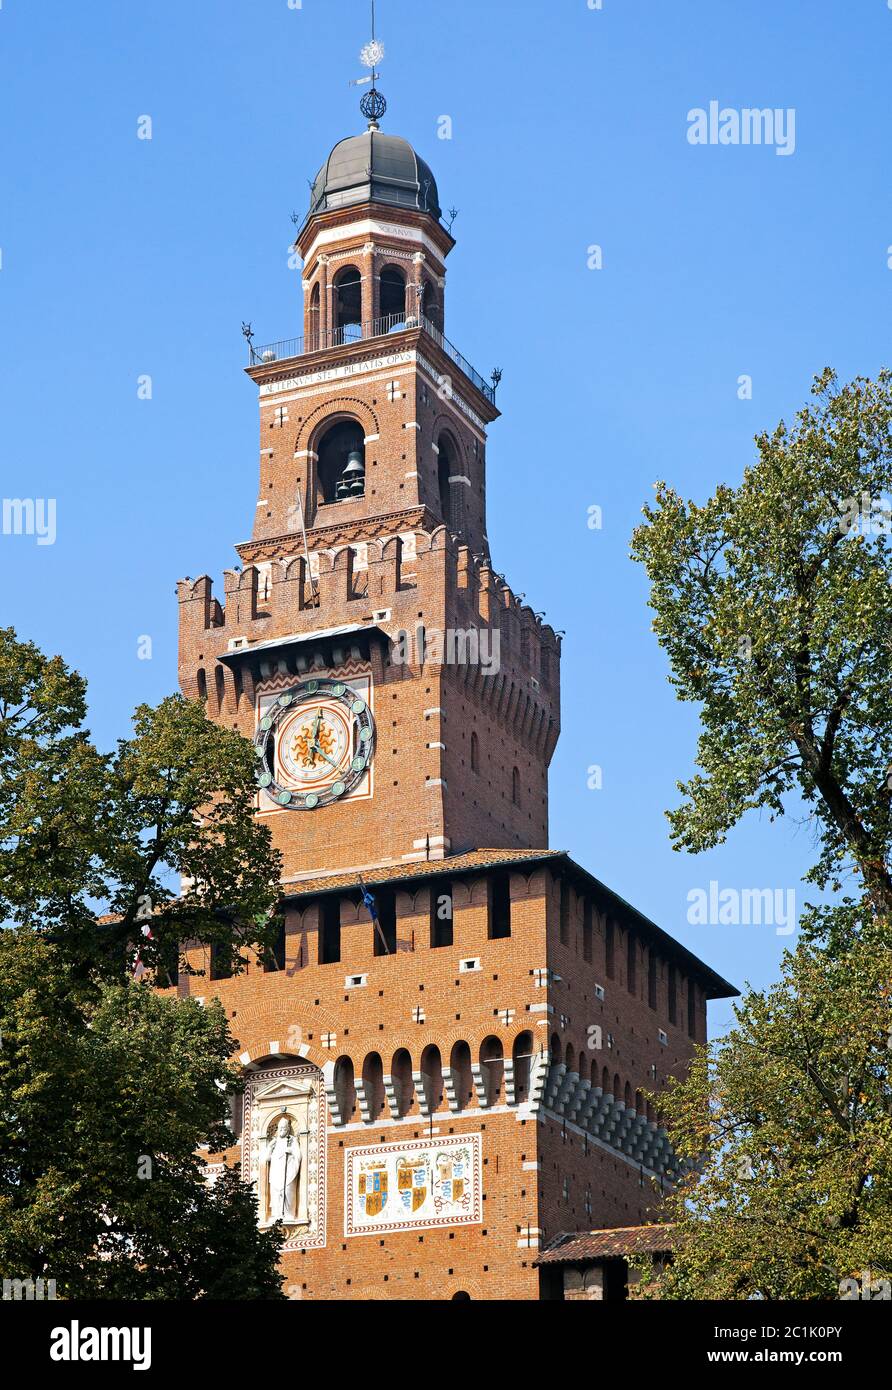 Sforza Castle tower, Milan Stock Photo - Alamy